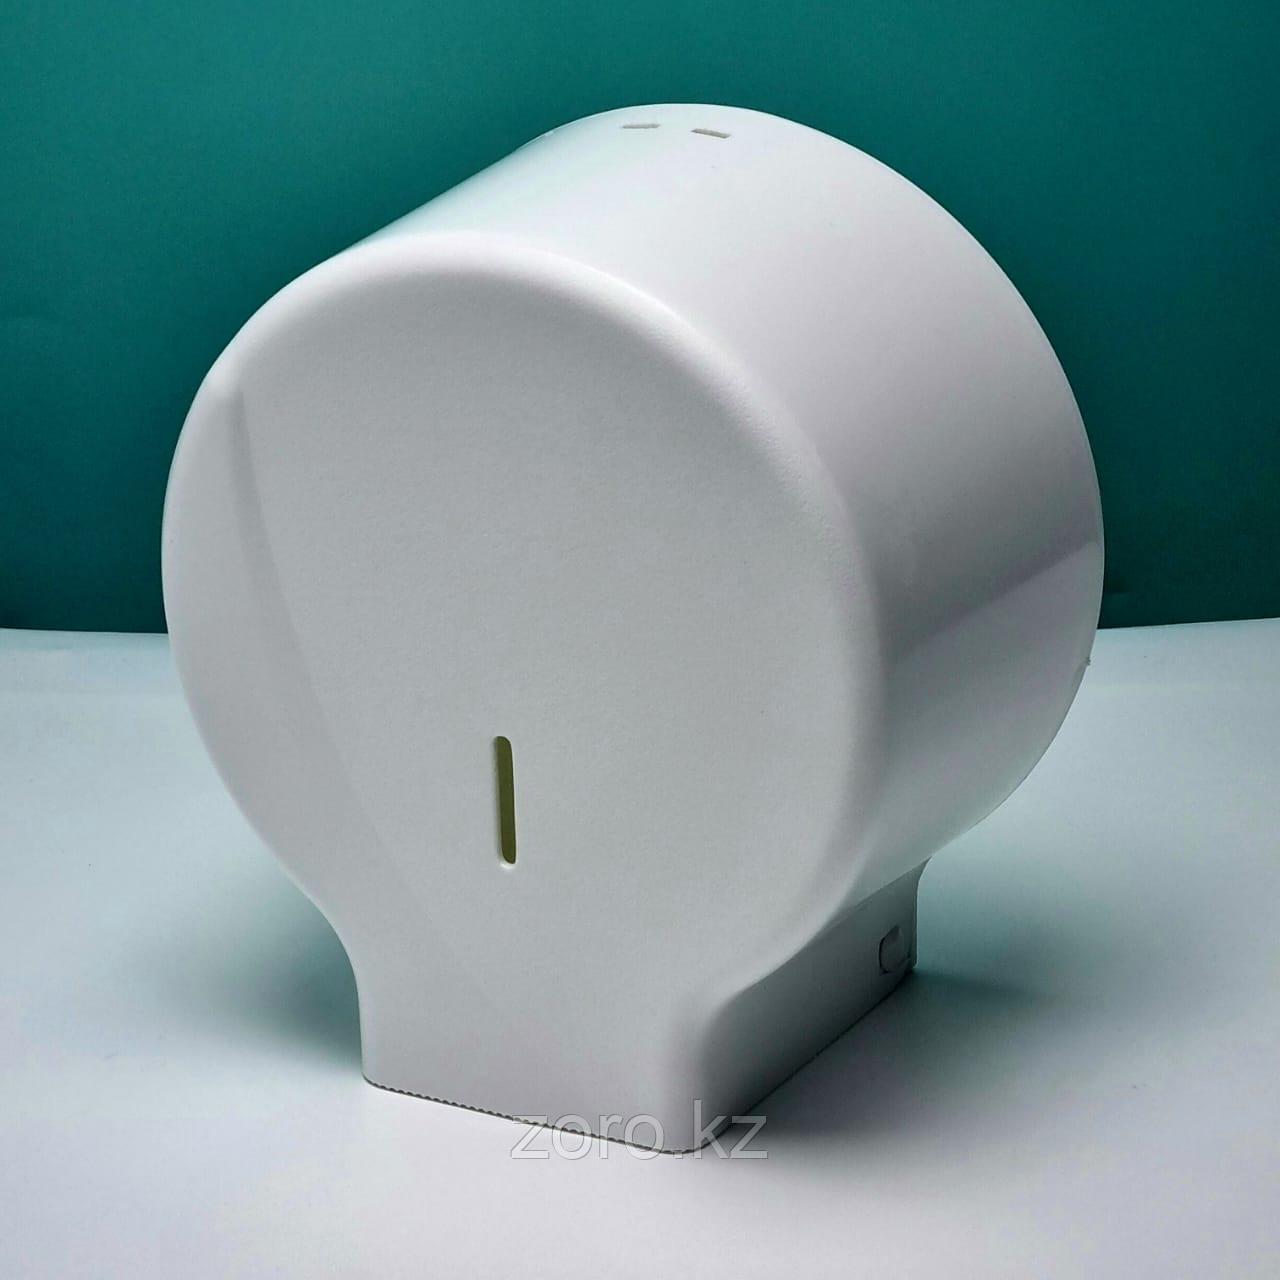 Диспенсер антивандальный для туалетной бумаги джамбо Jumbo белый пластик Турция. RJ, фото 1